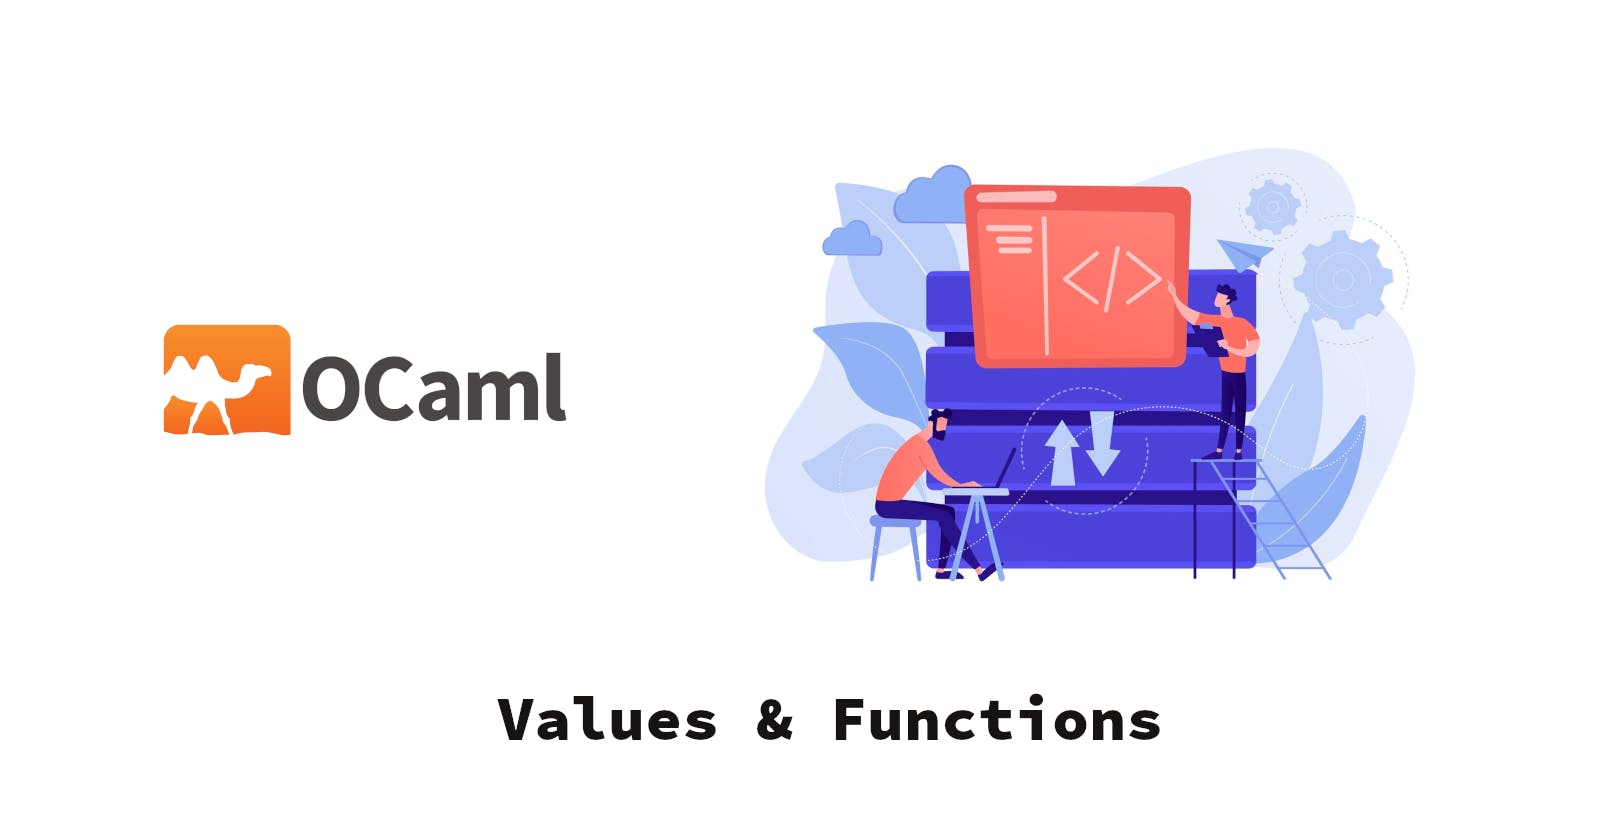 Understanding Values and Functions in OCaml